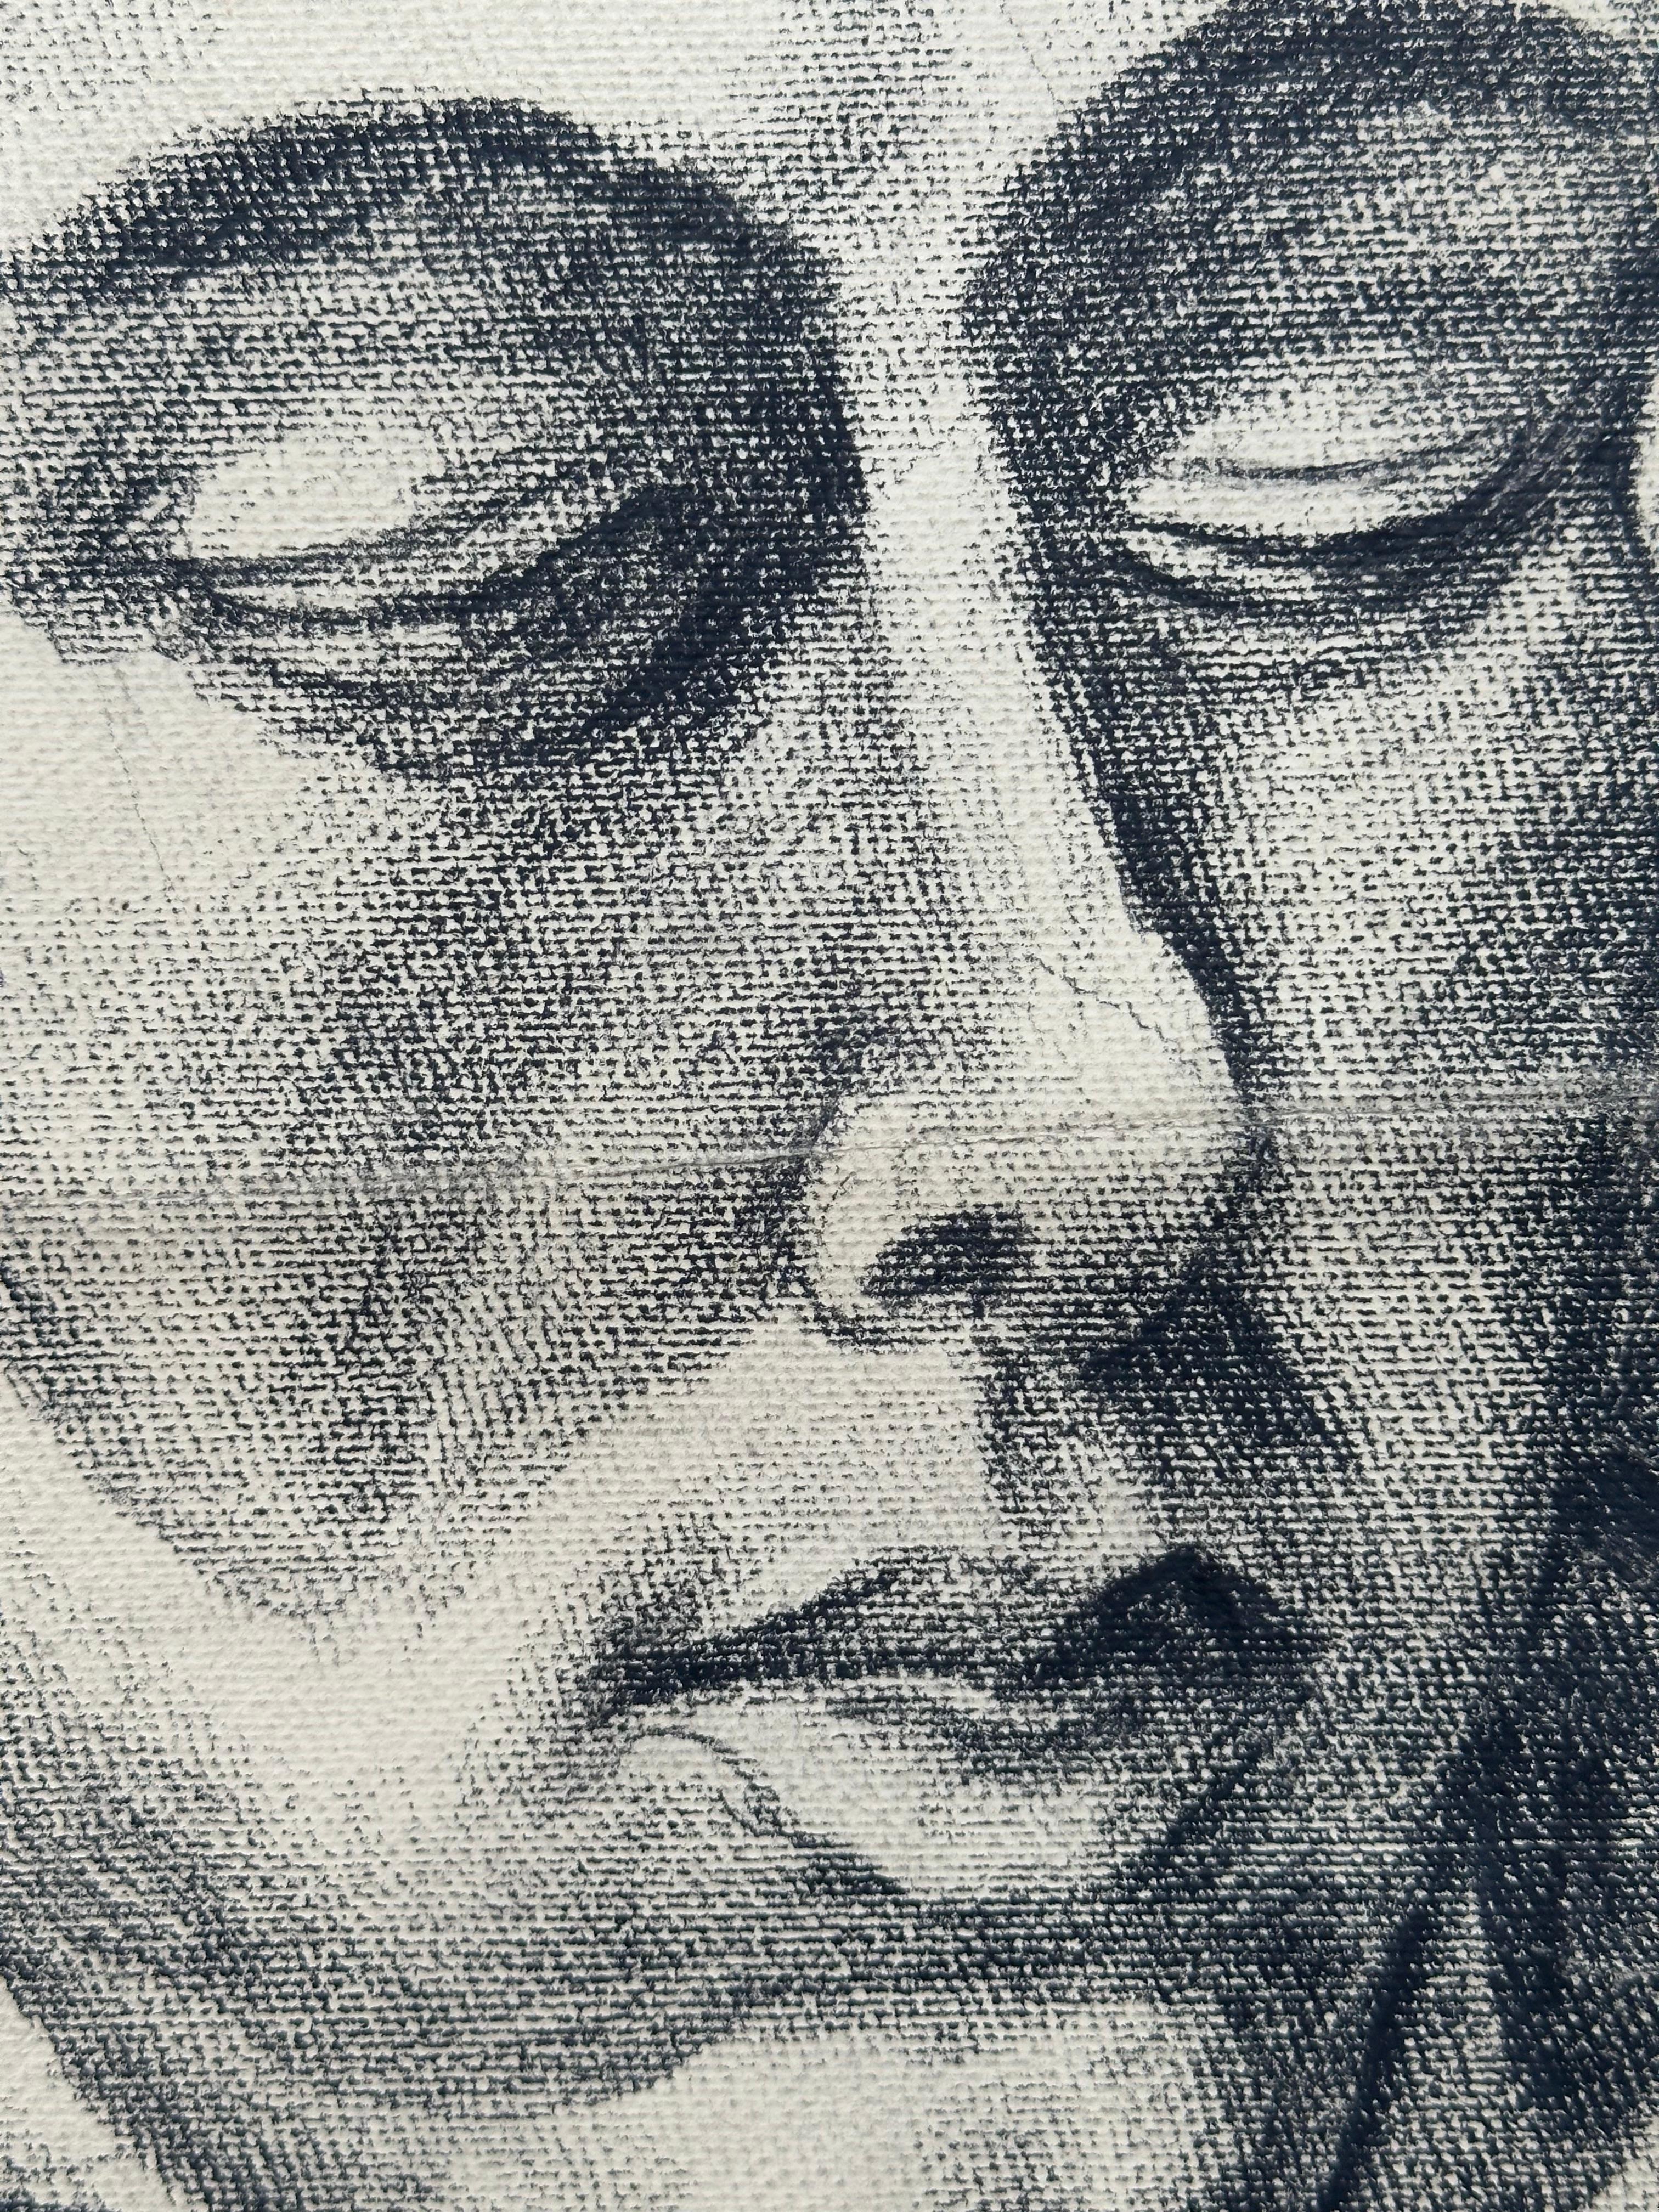 Portrait of James Dean - Realist Art by Joseph Kardonne